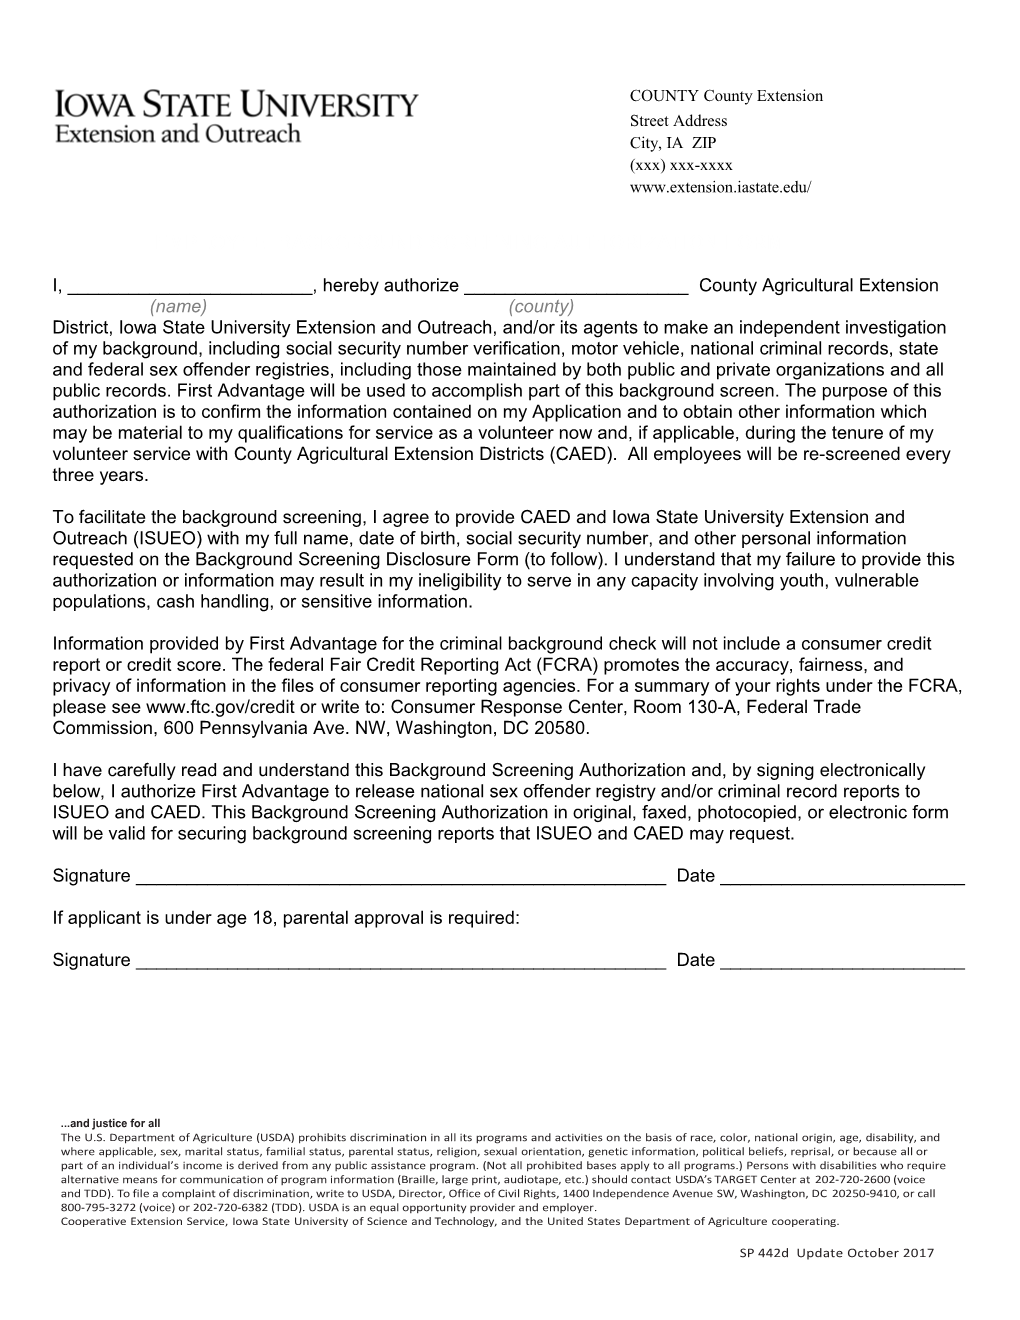 Employee Backgroundscreeningauthorization Form